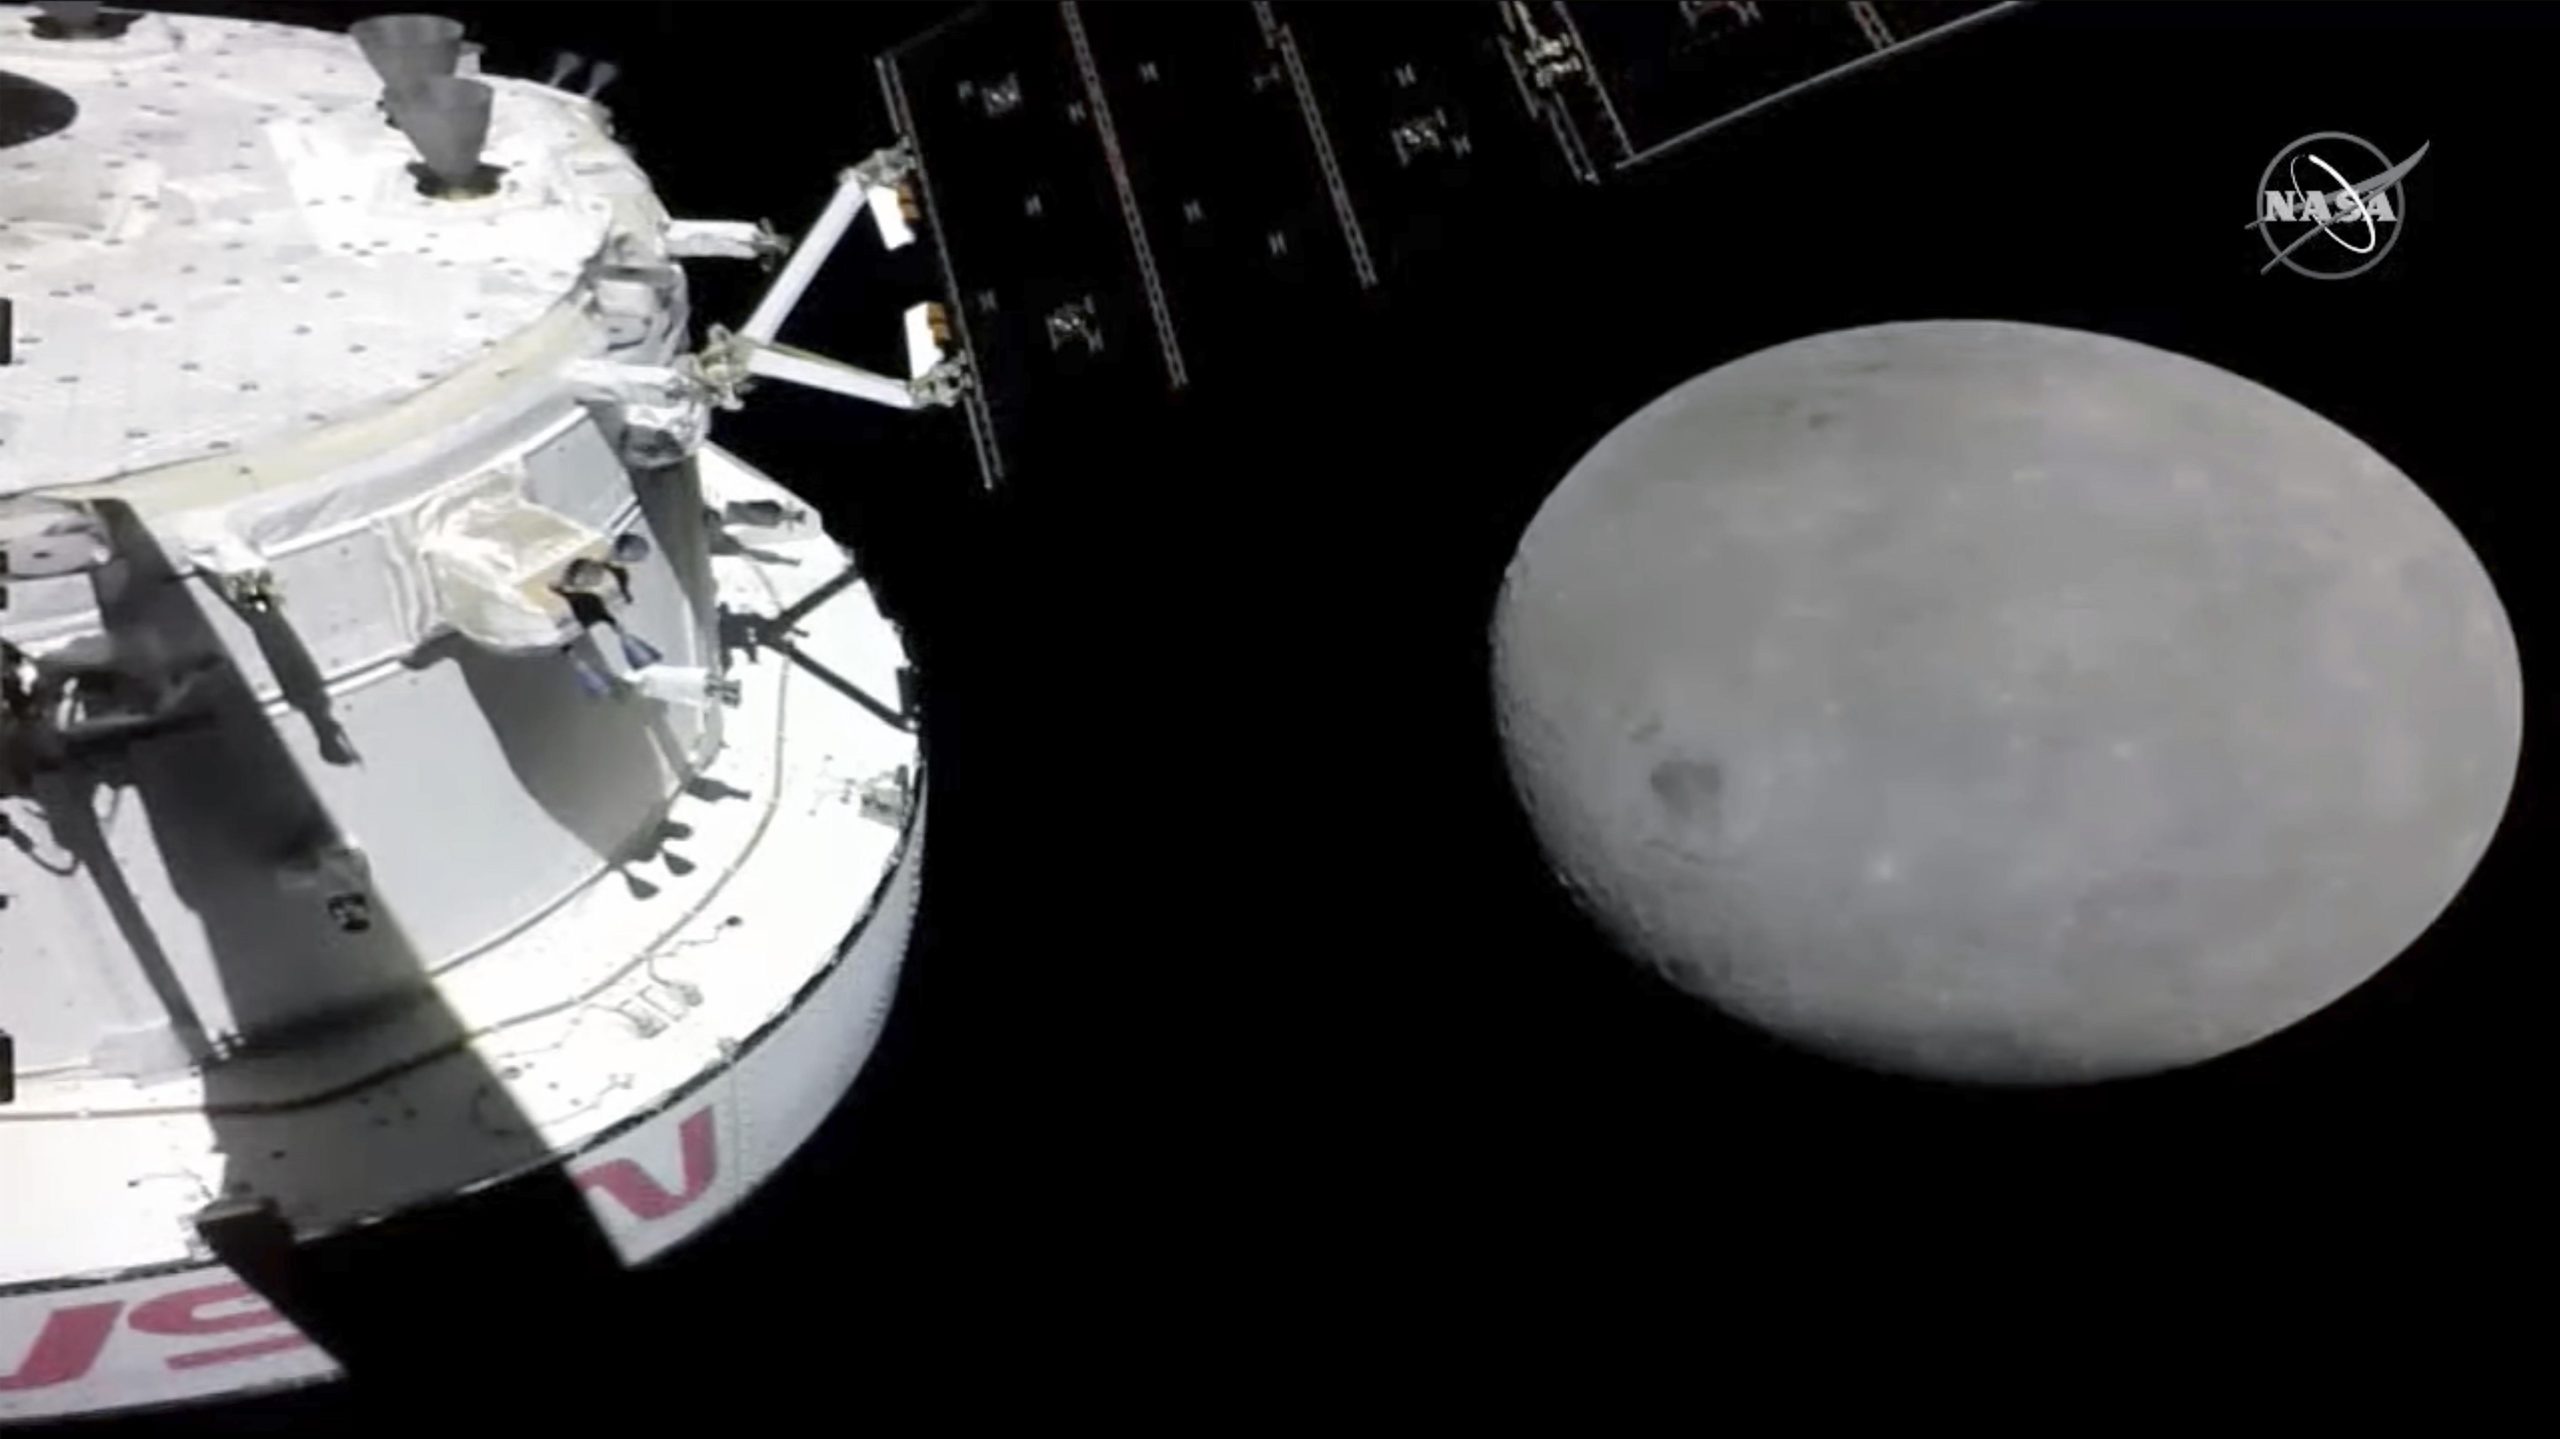 NASA capsule has reached the moon